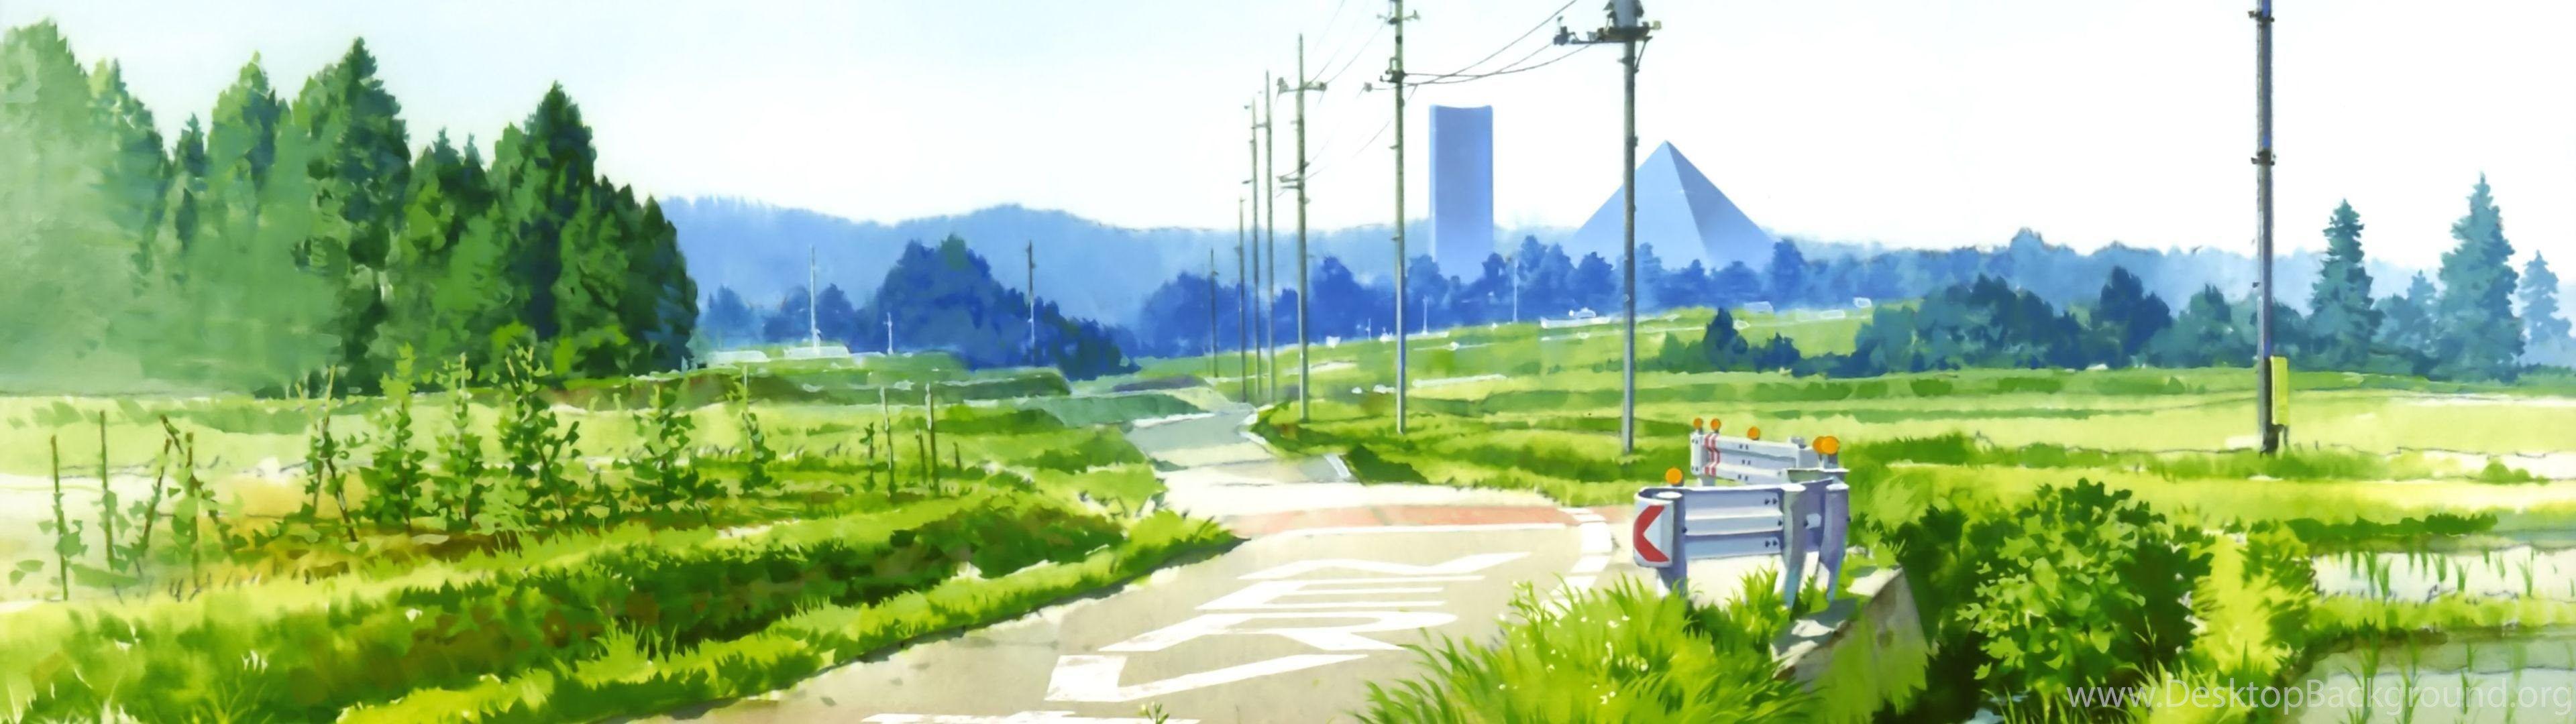 Dual monitor wallpaper anime landscape - ladegvista